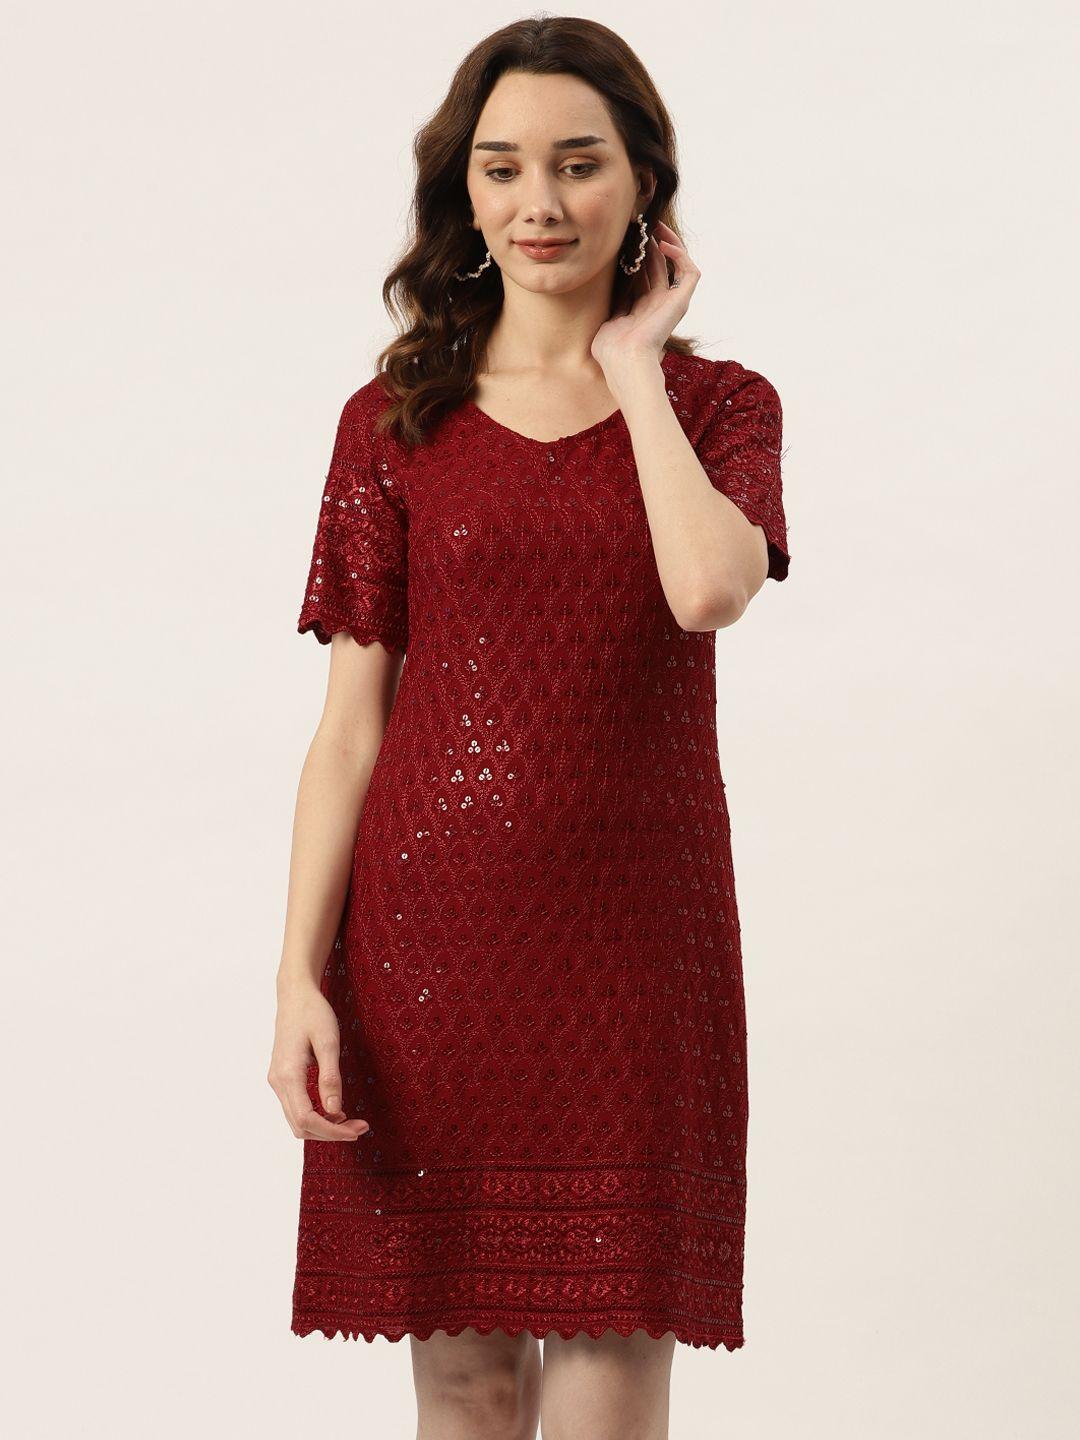 brinns maroon embellished lace sheath dress